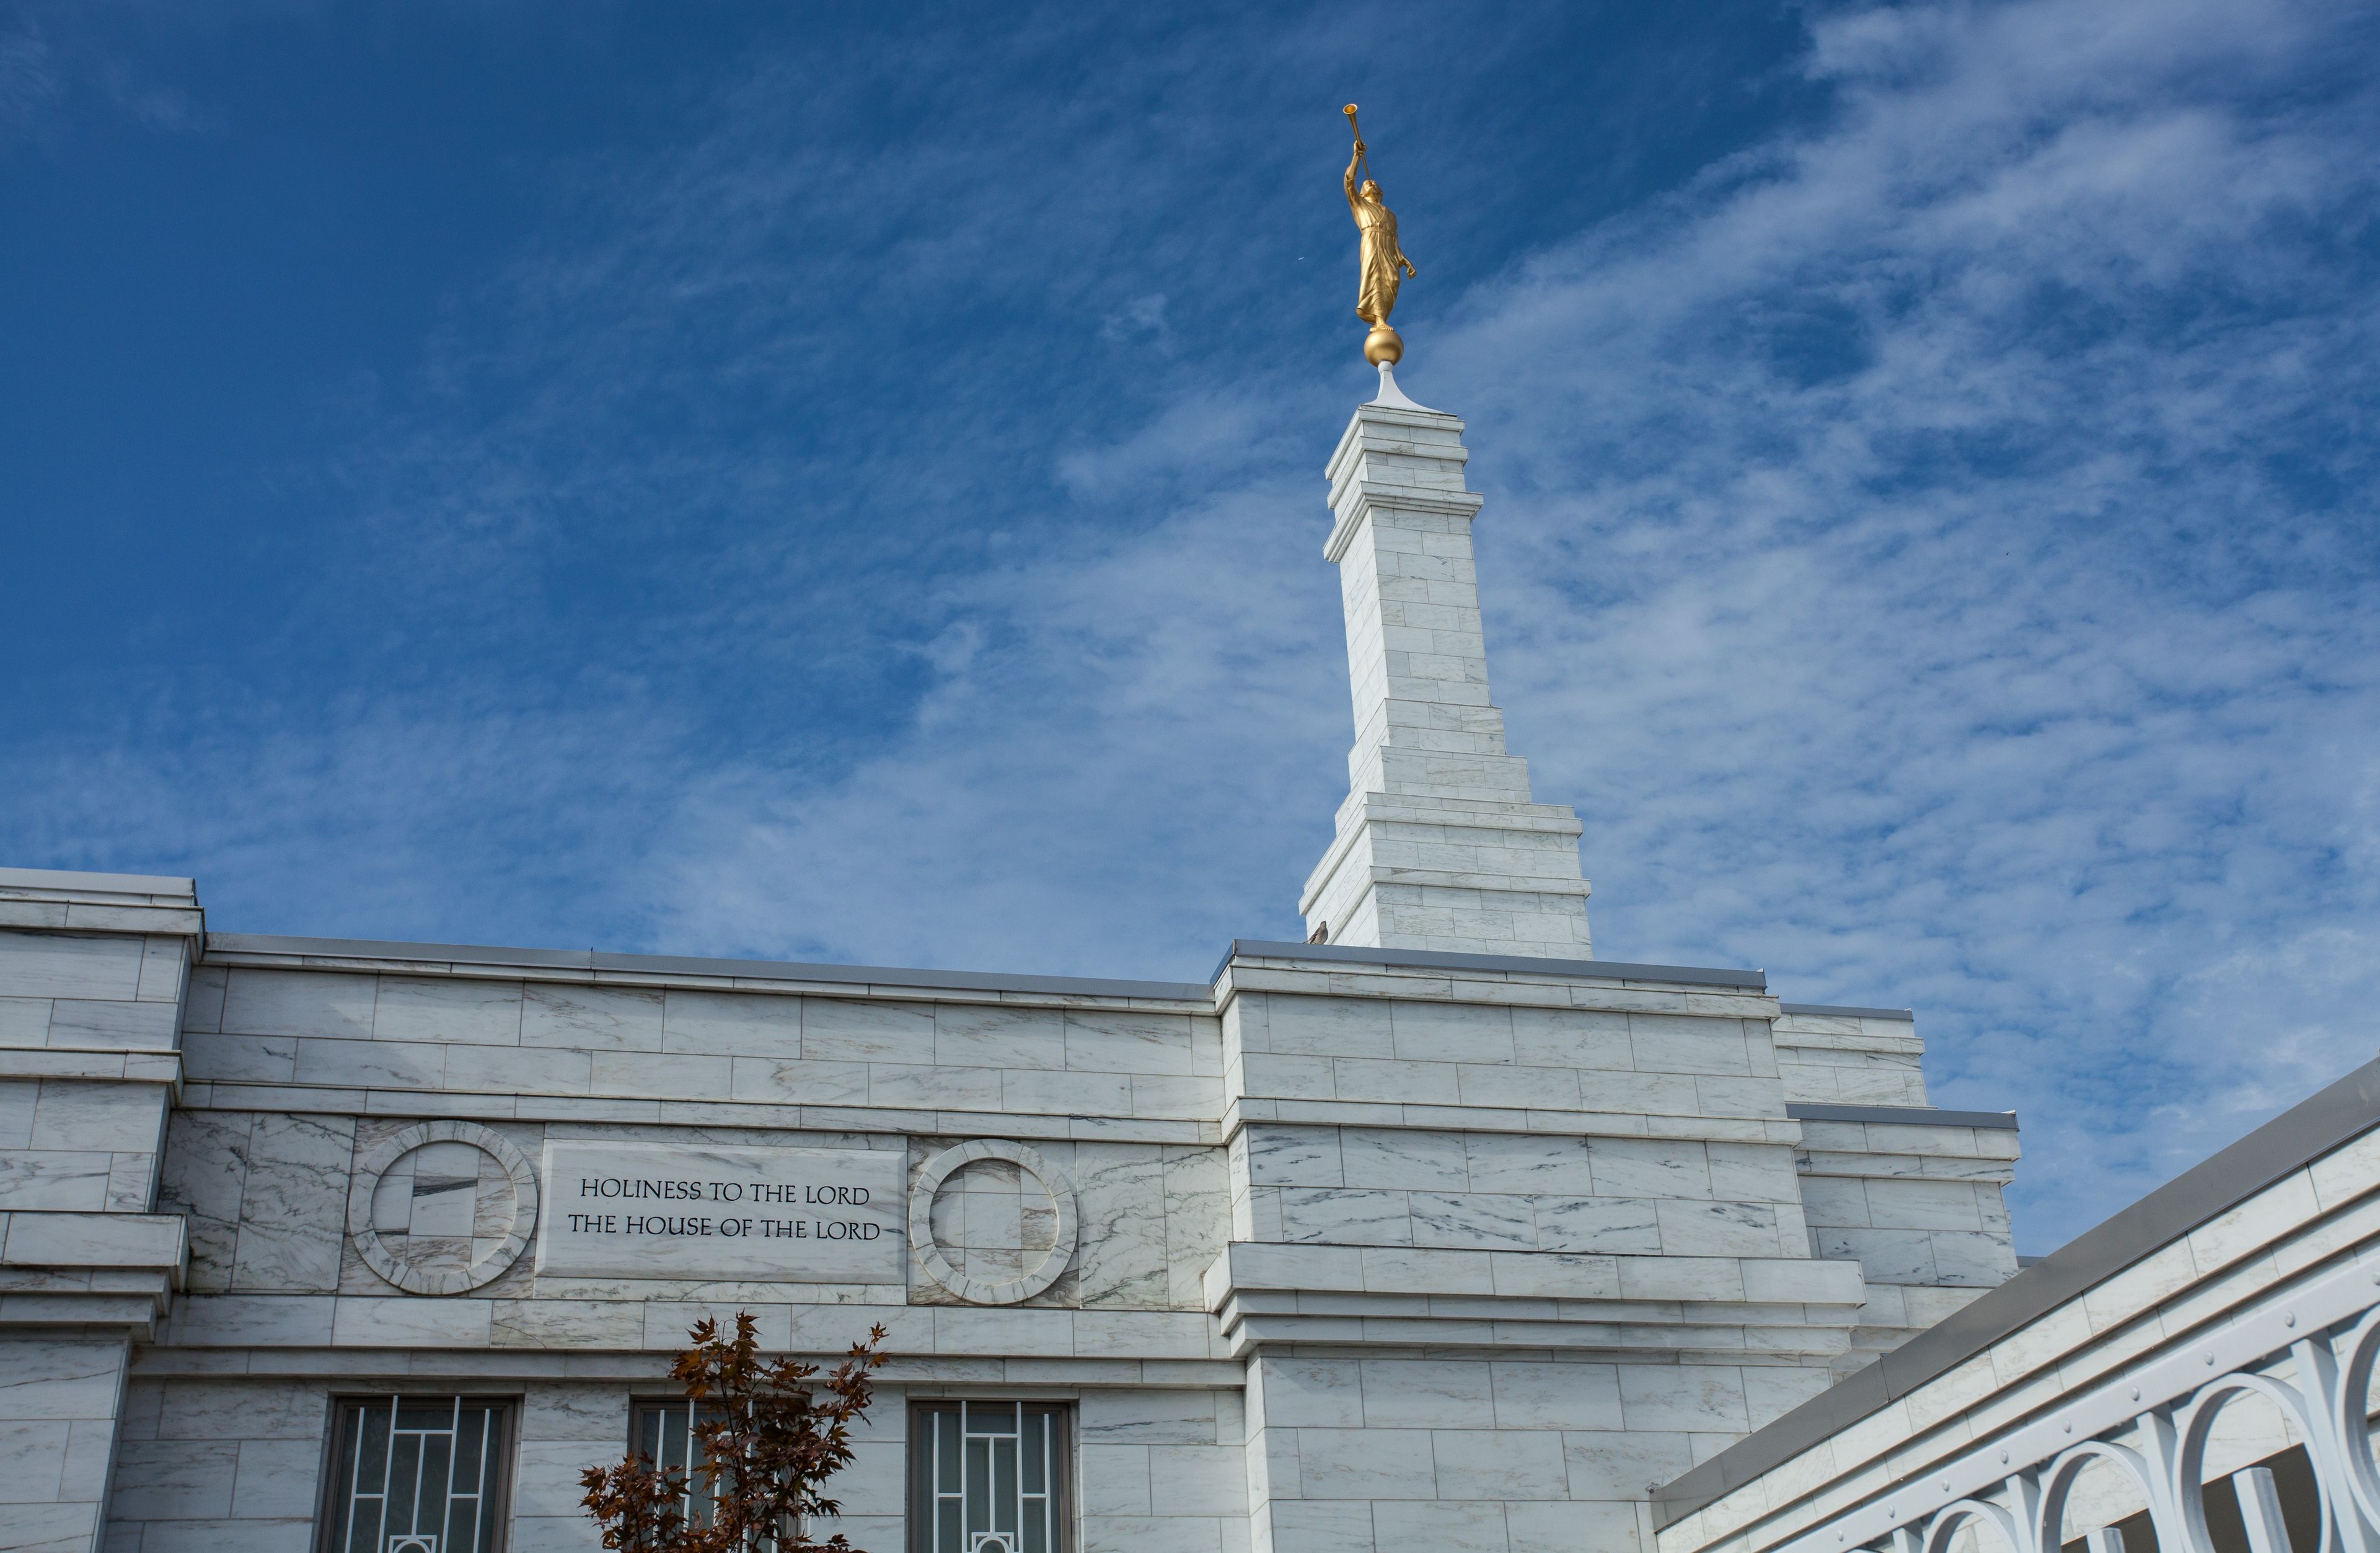 A close-up exterior view of the Columbia South Carolina Temple.